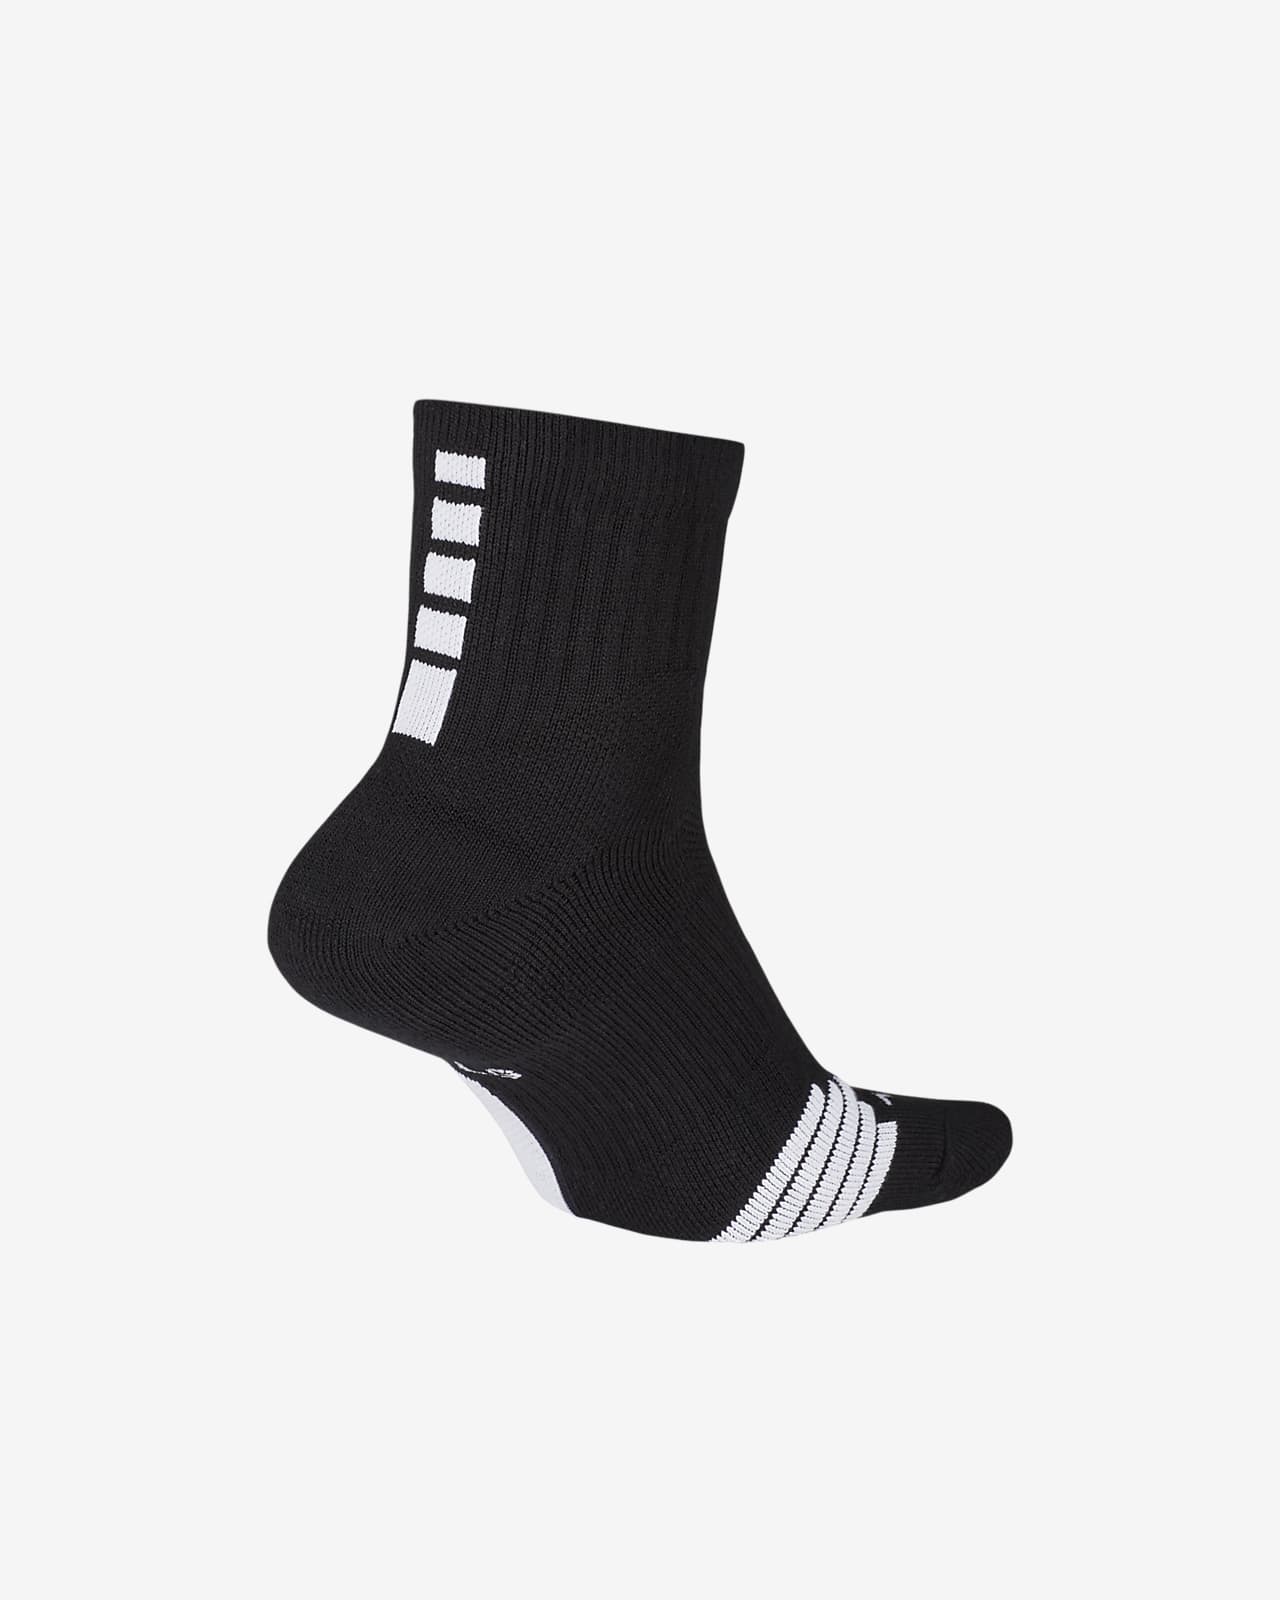 white nike pro socks